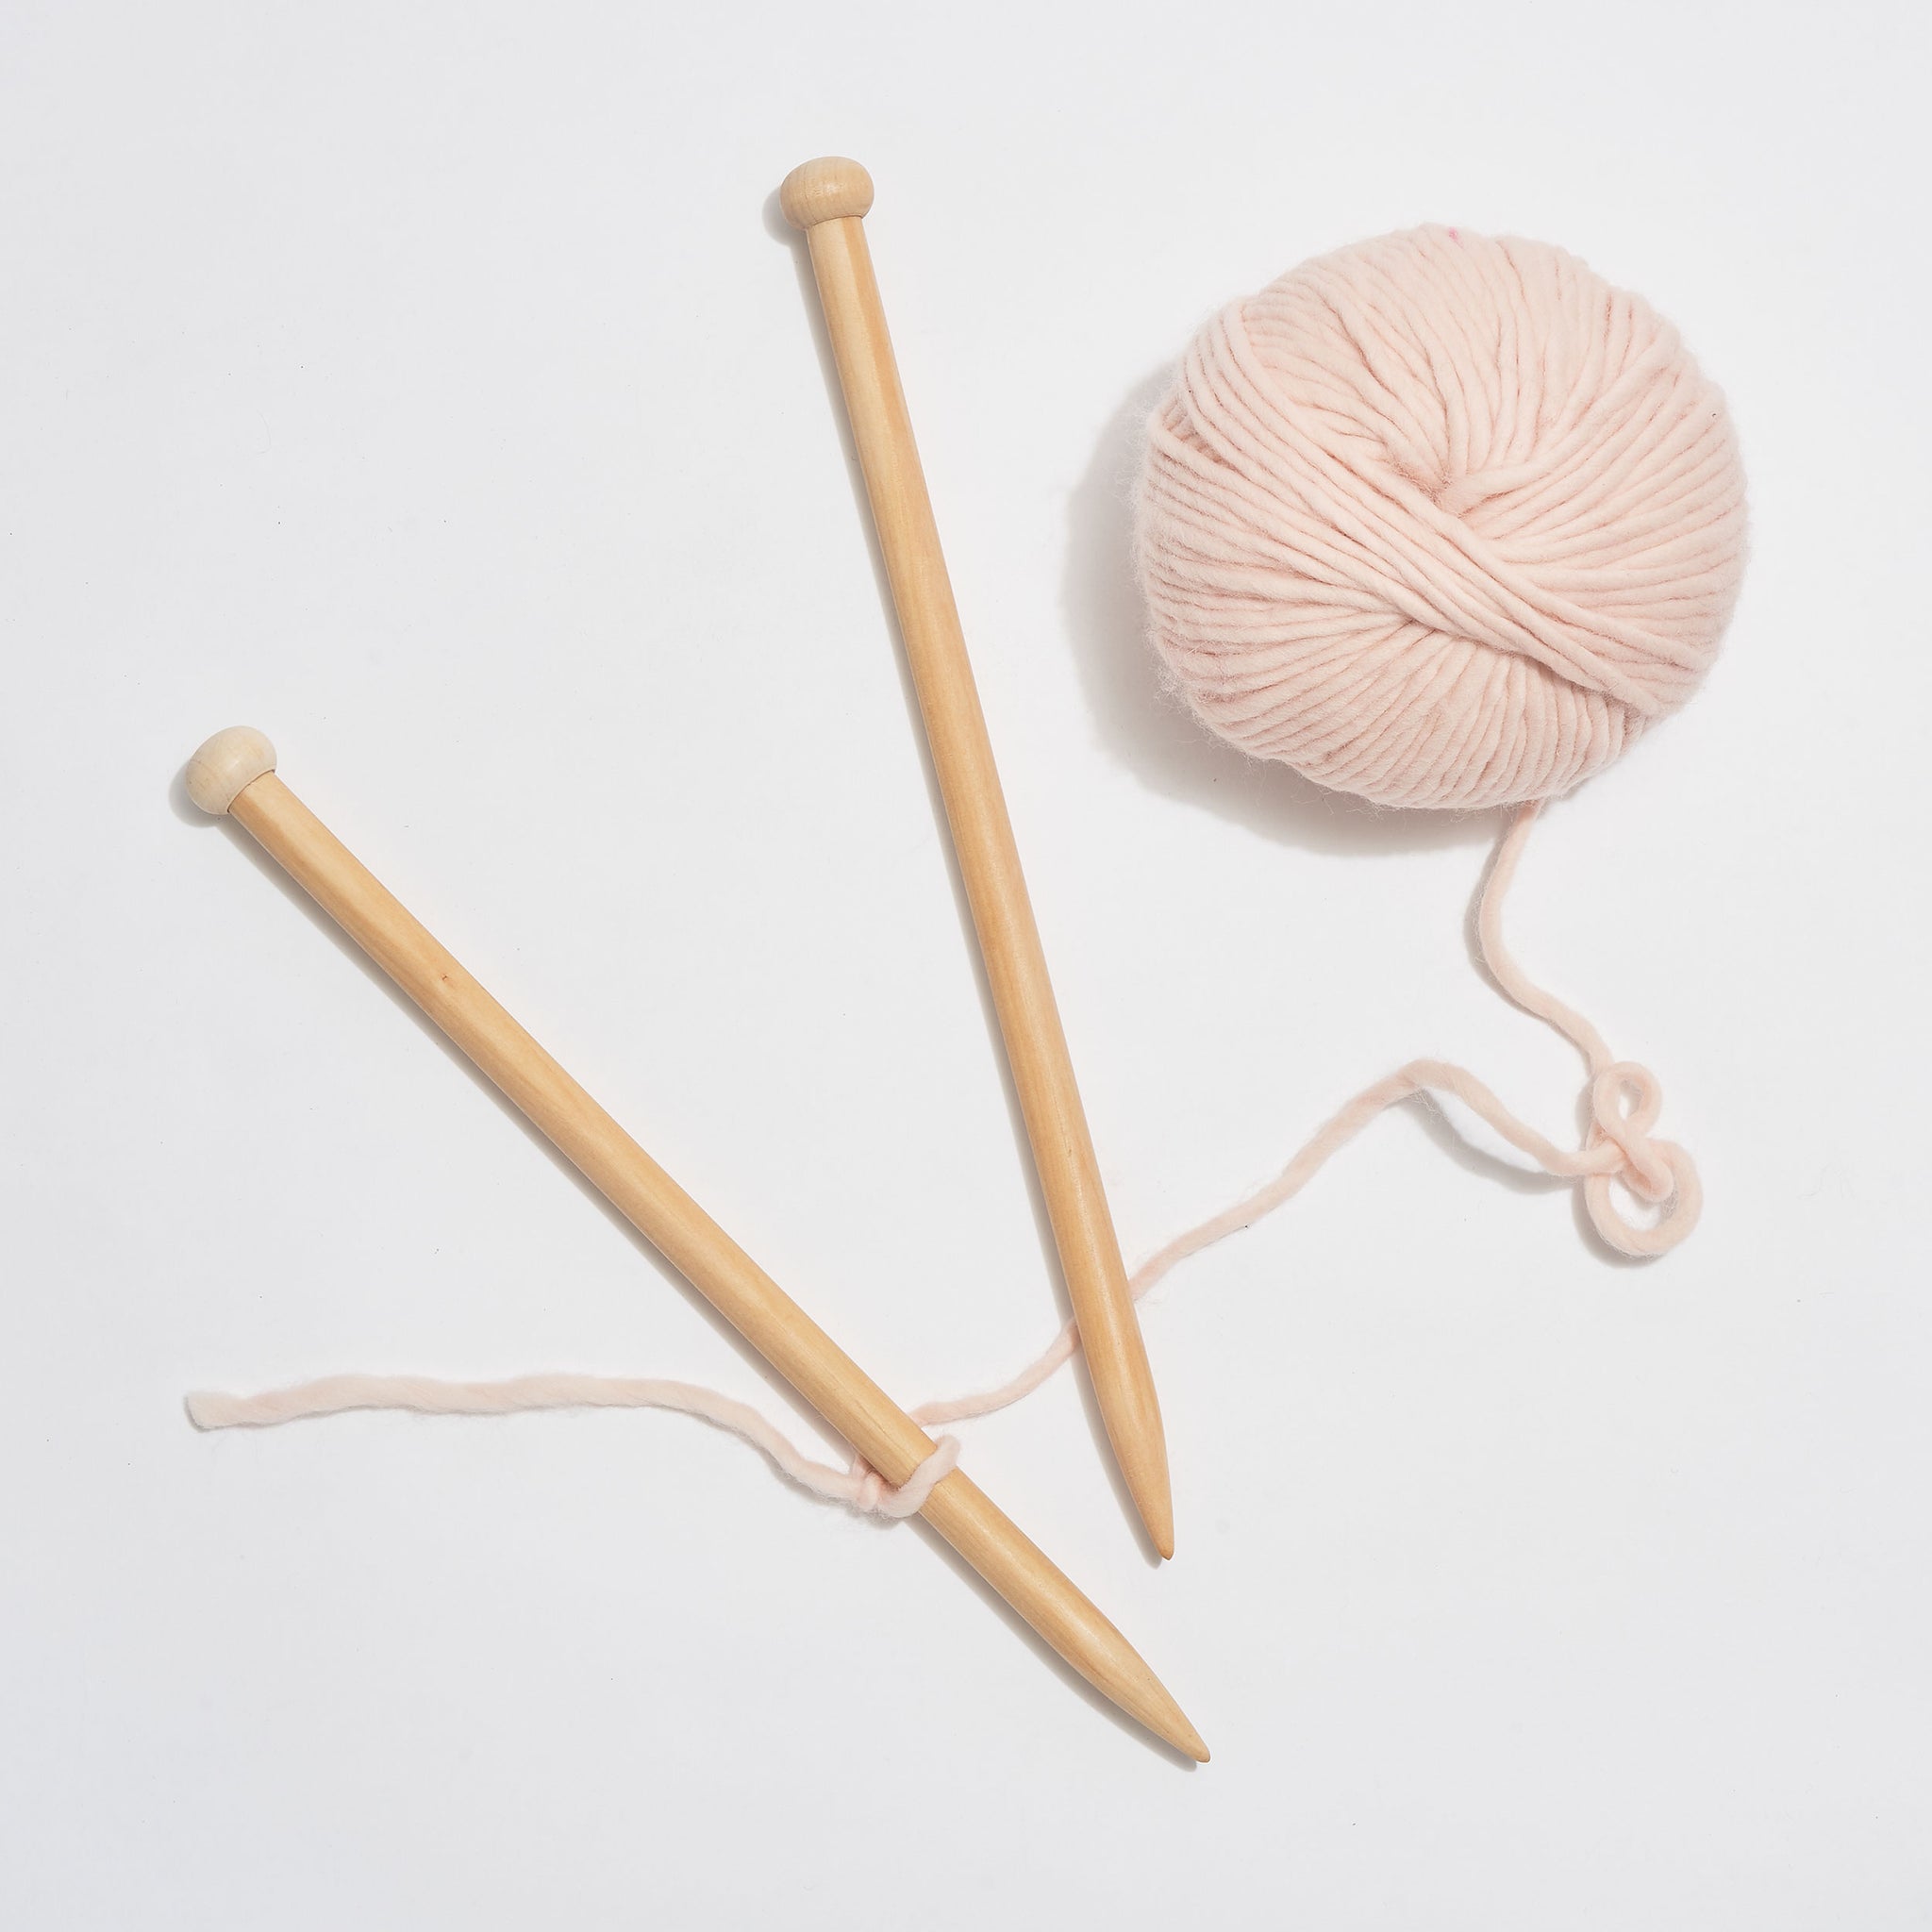 Size 15mm Straight Knitting Needles